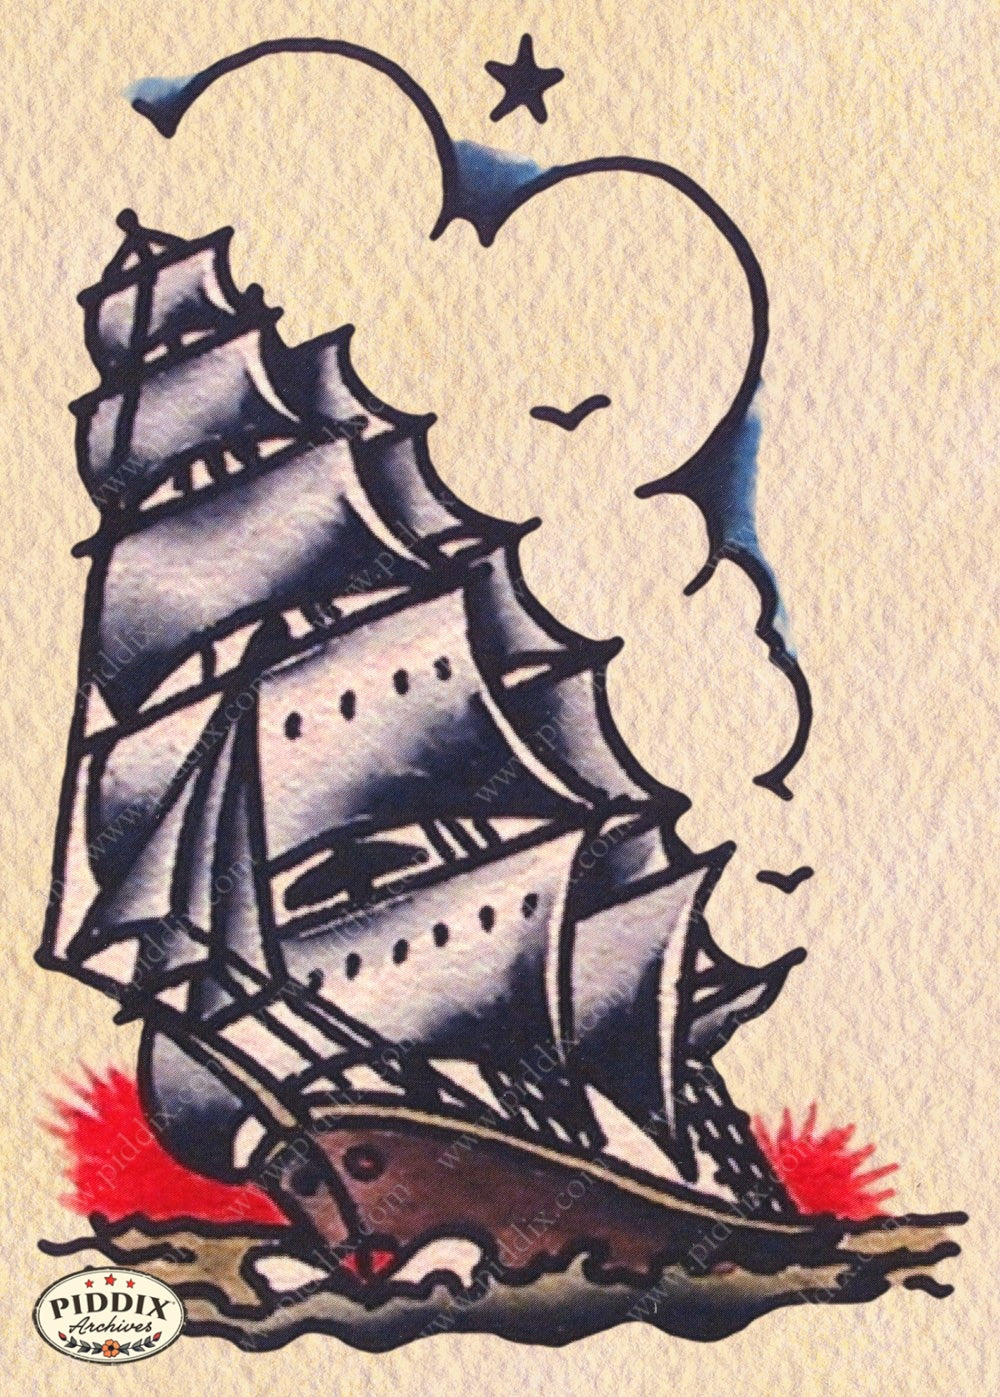 Nautical And Navy Ahoy! Sailor Canvas Art by Design Harvest